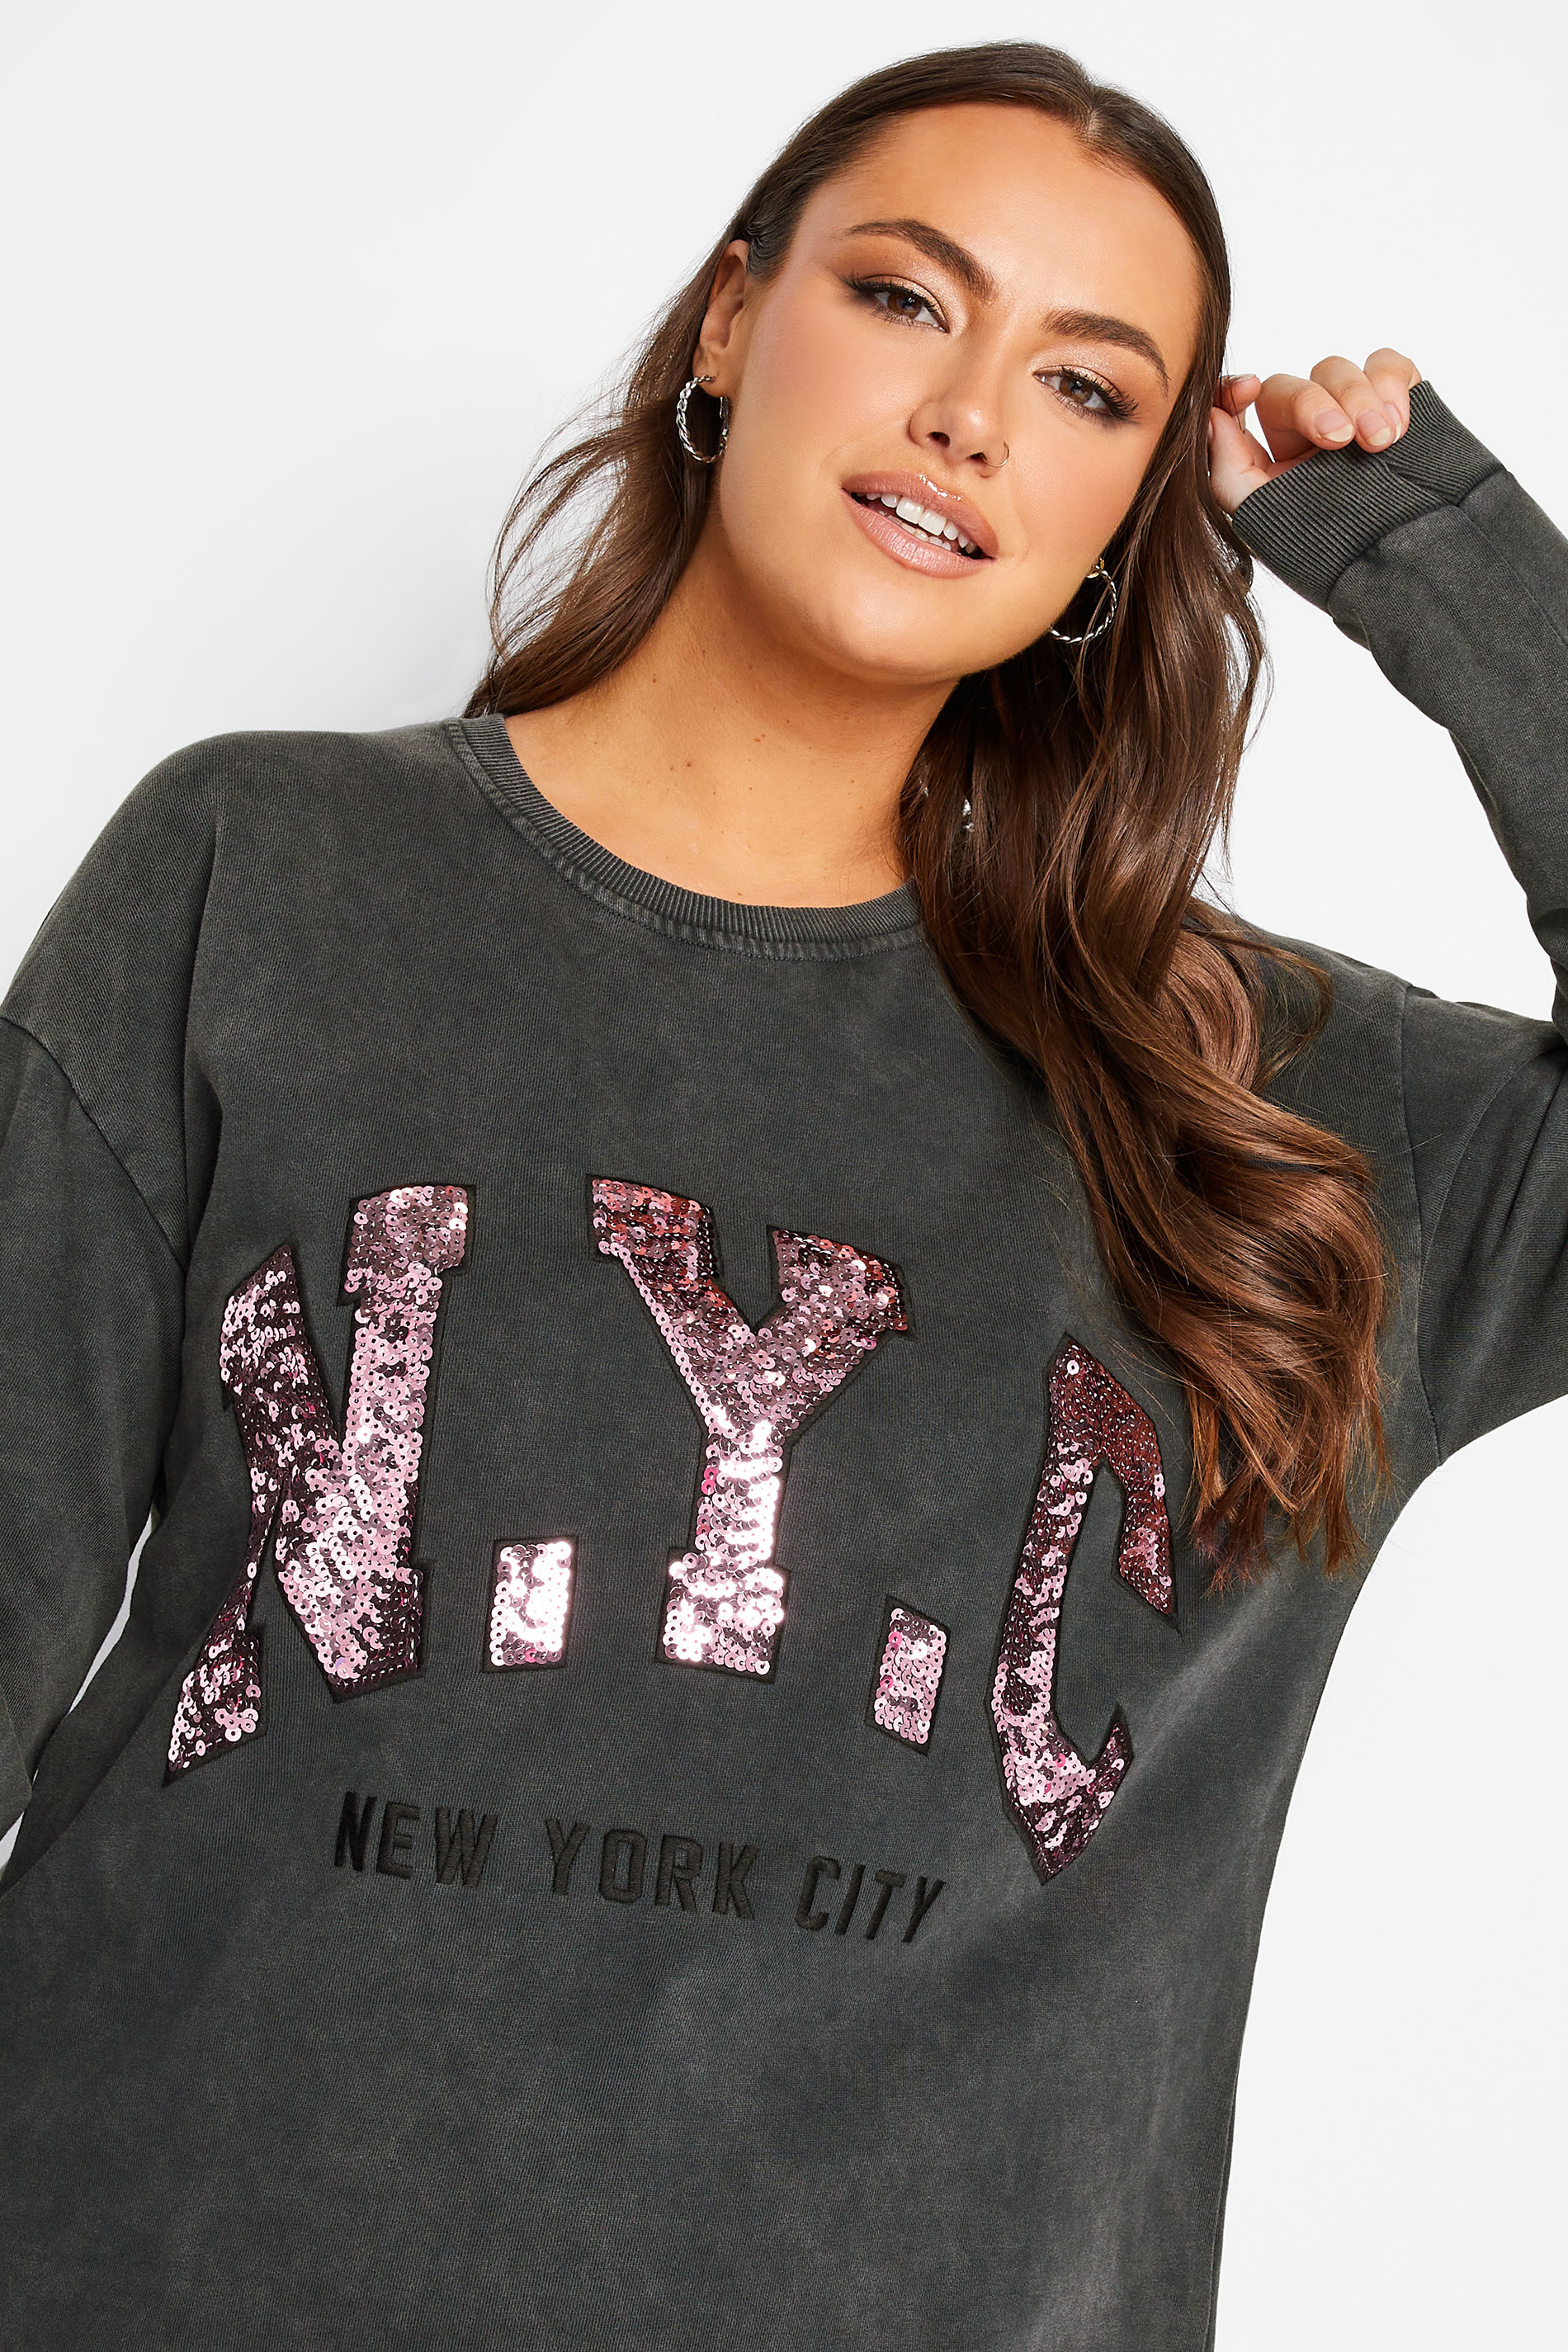 YOURS LUXURY Plus Size Grey Acid Wash Embellished 'NYC' Sweatshirt | Yours Clothing 1